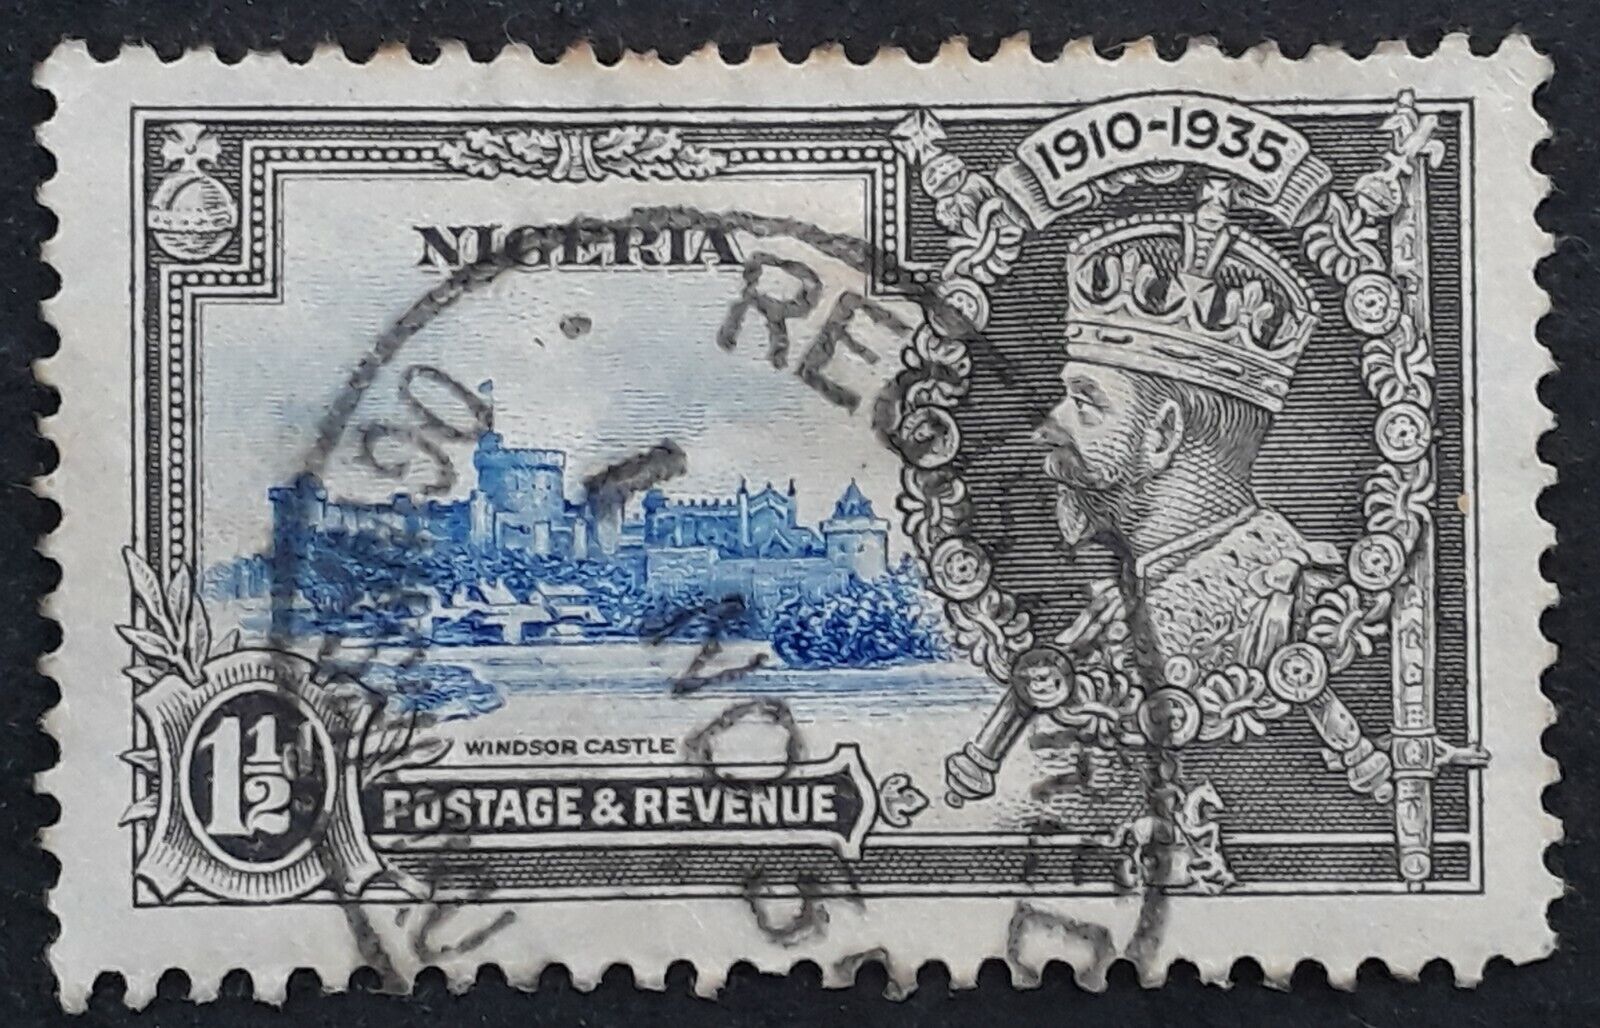 1935 Nigeria 1 1/2c Silver Jubilee KGV stamp cancelled Ogwashi-U